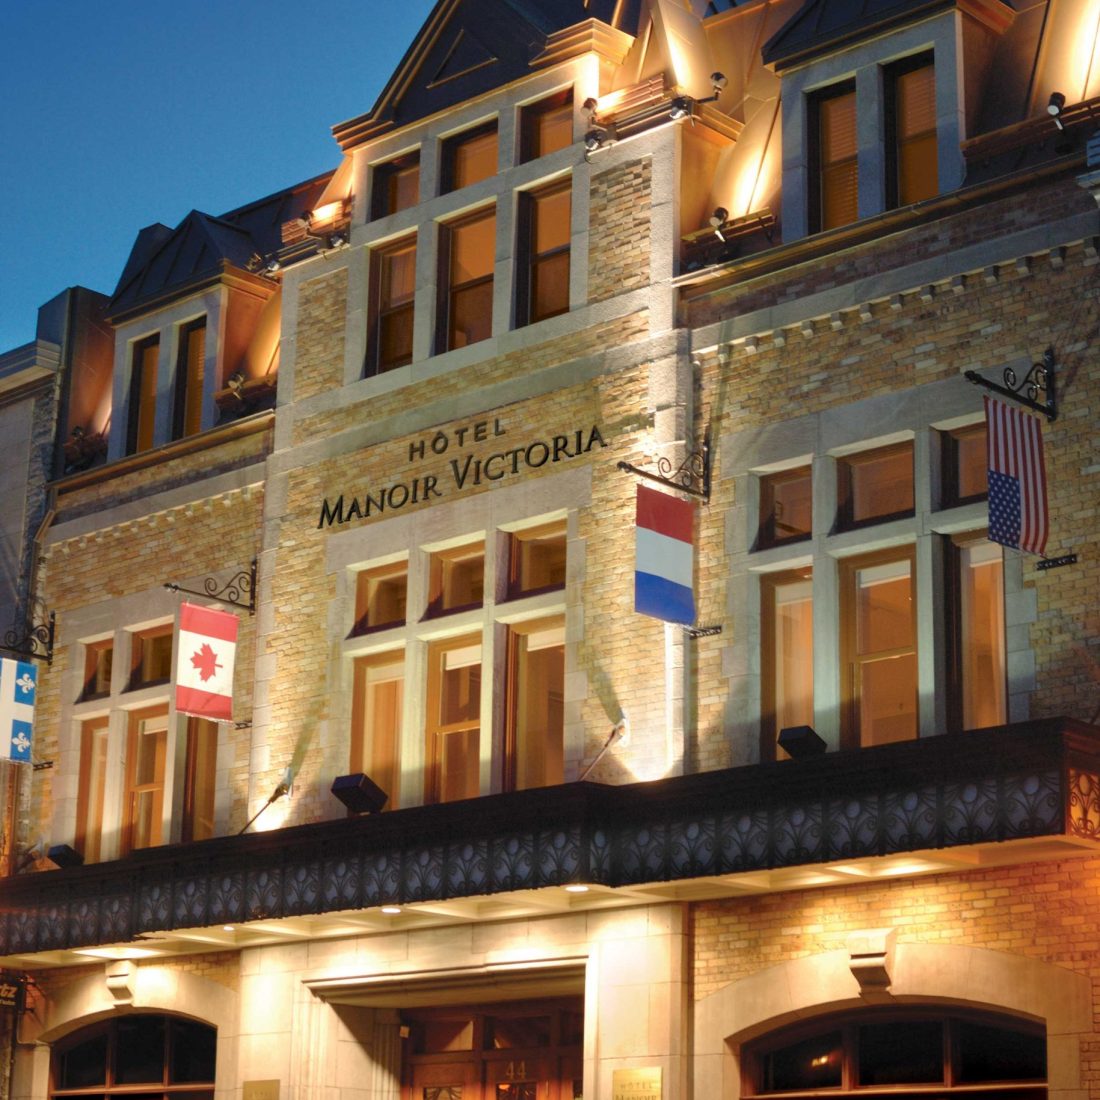 Hotel manoir victoria web scaled - Hôtel Manoir Victoria